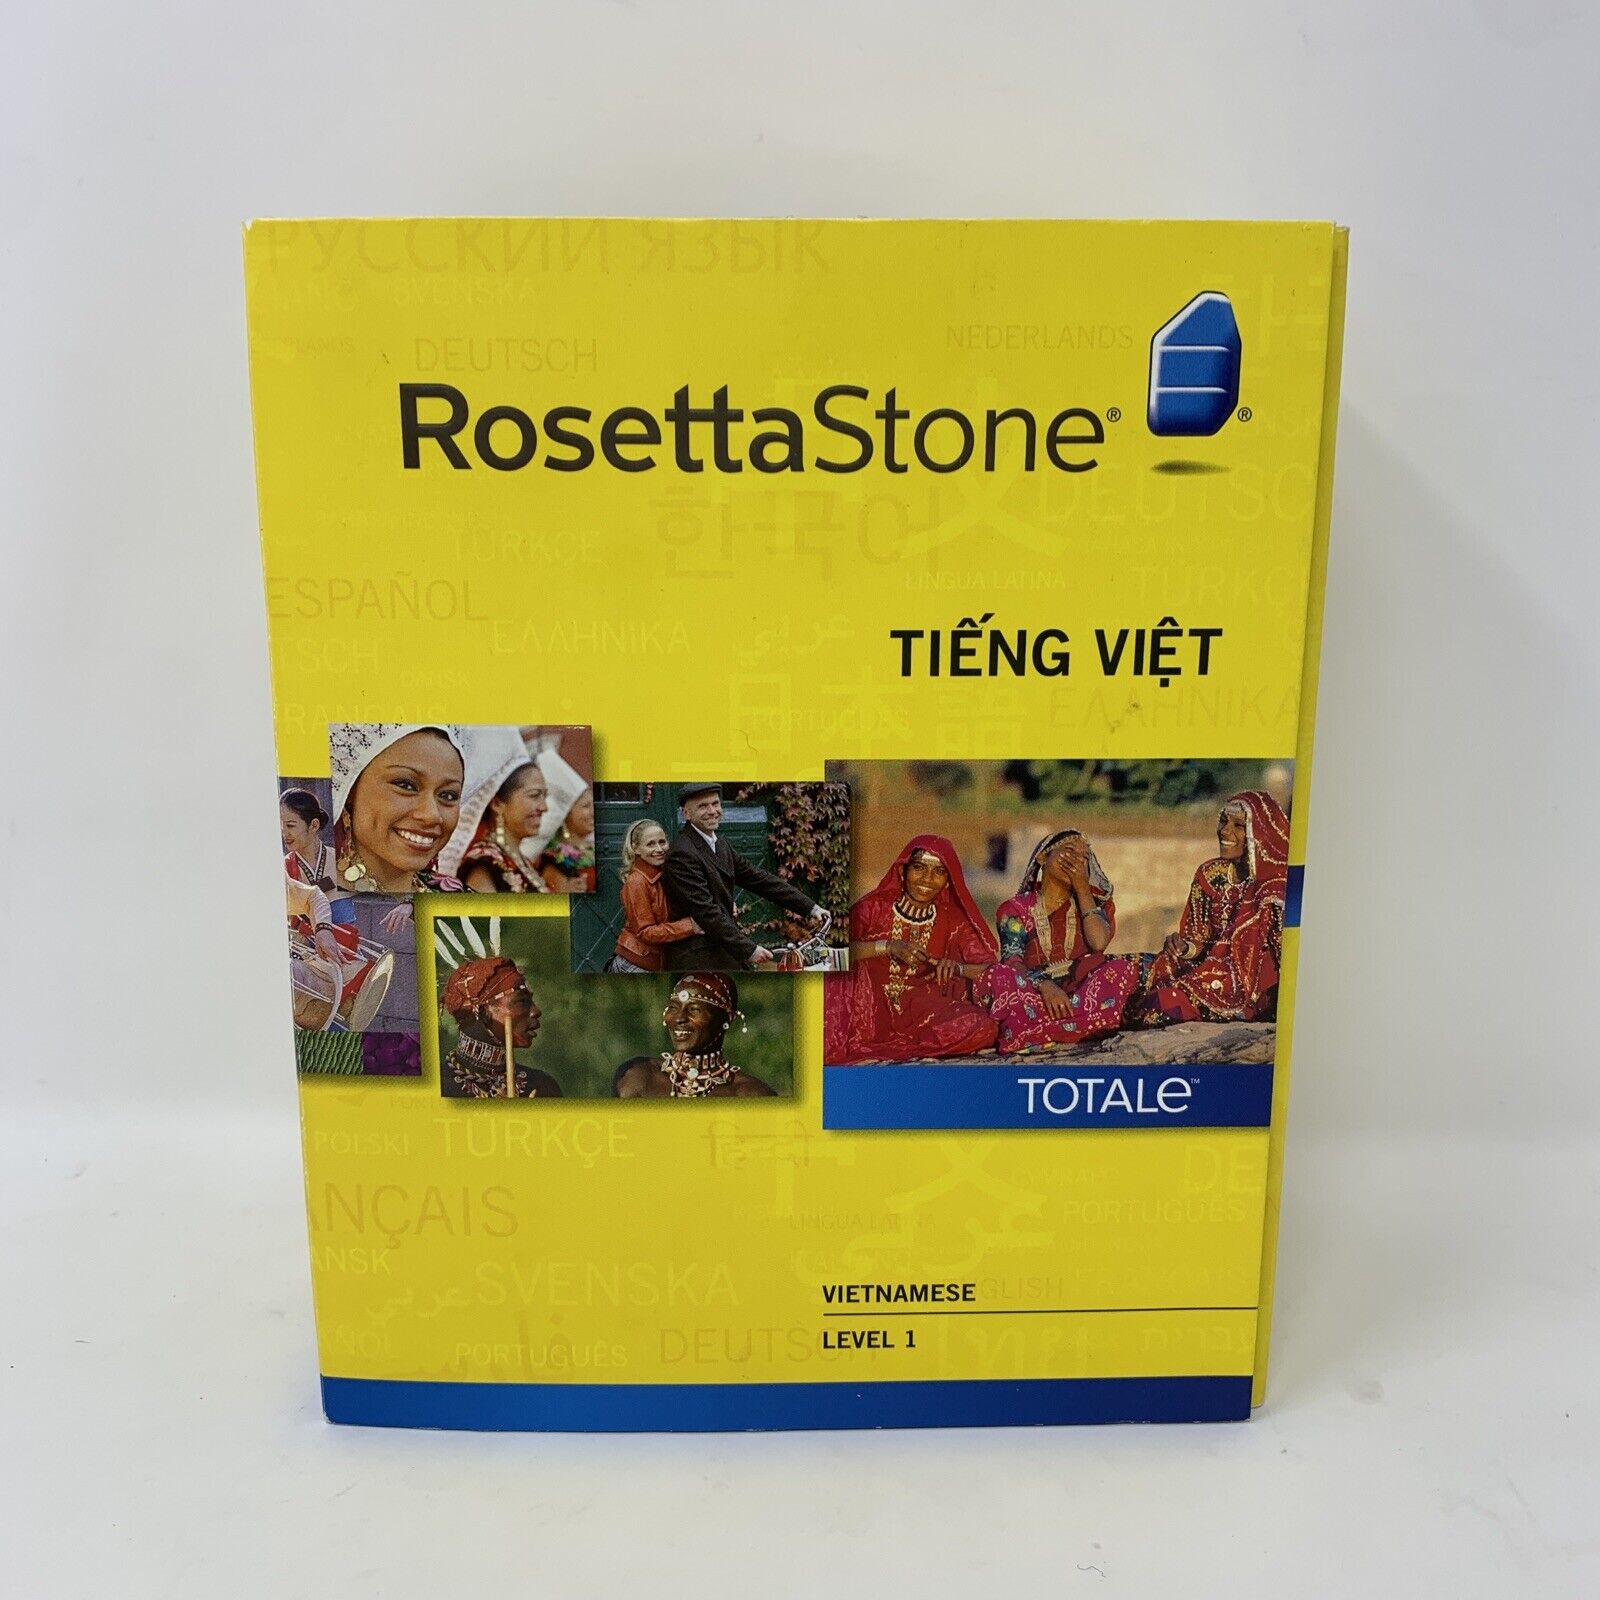 Rosetta Stone Language Vietnamese Level 1 Software New Open Box Untouched